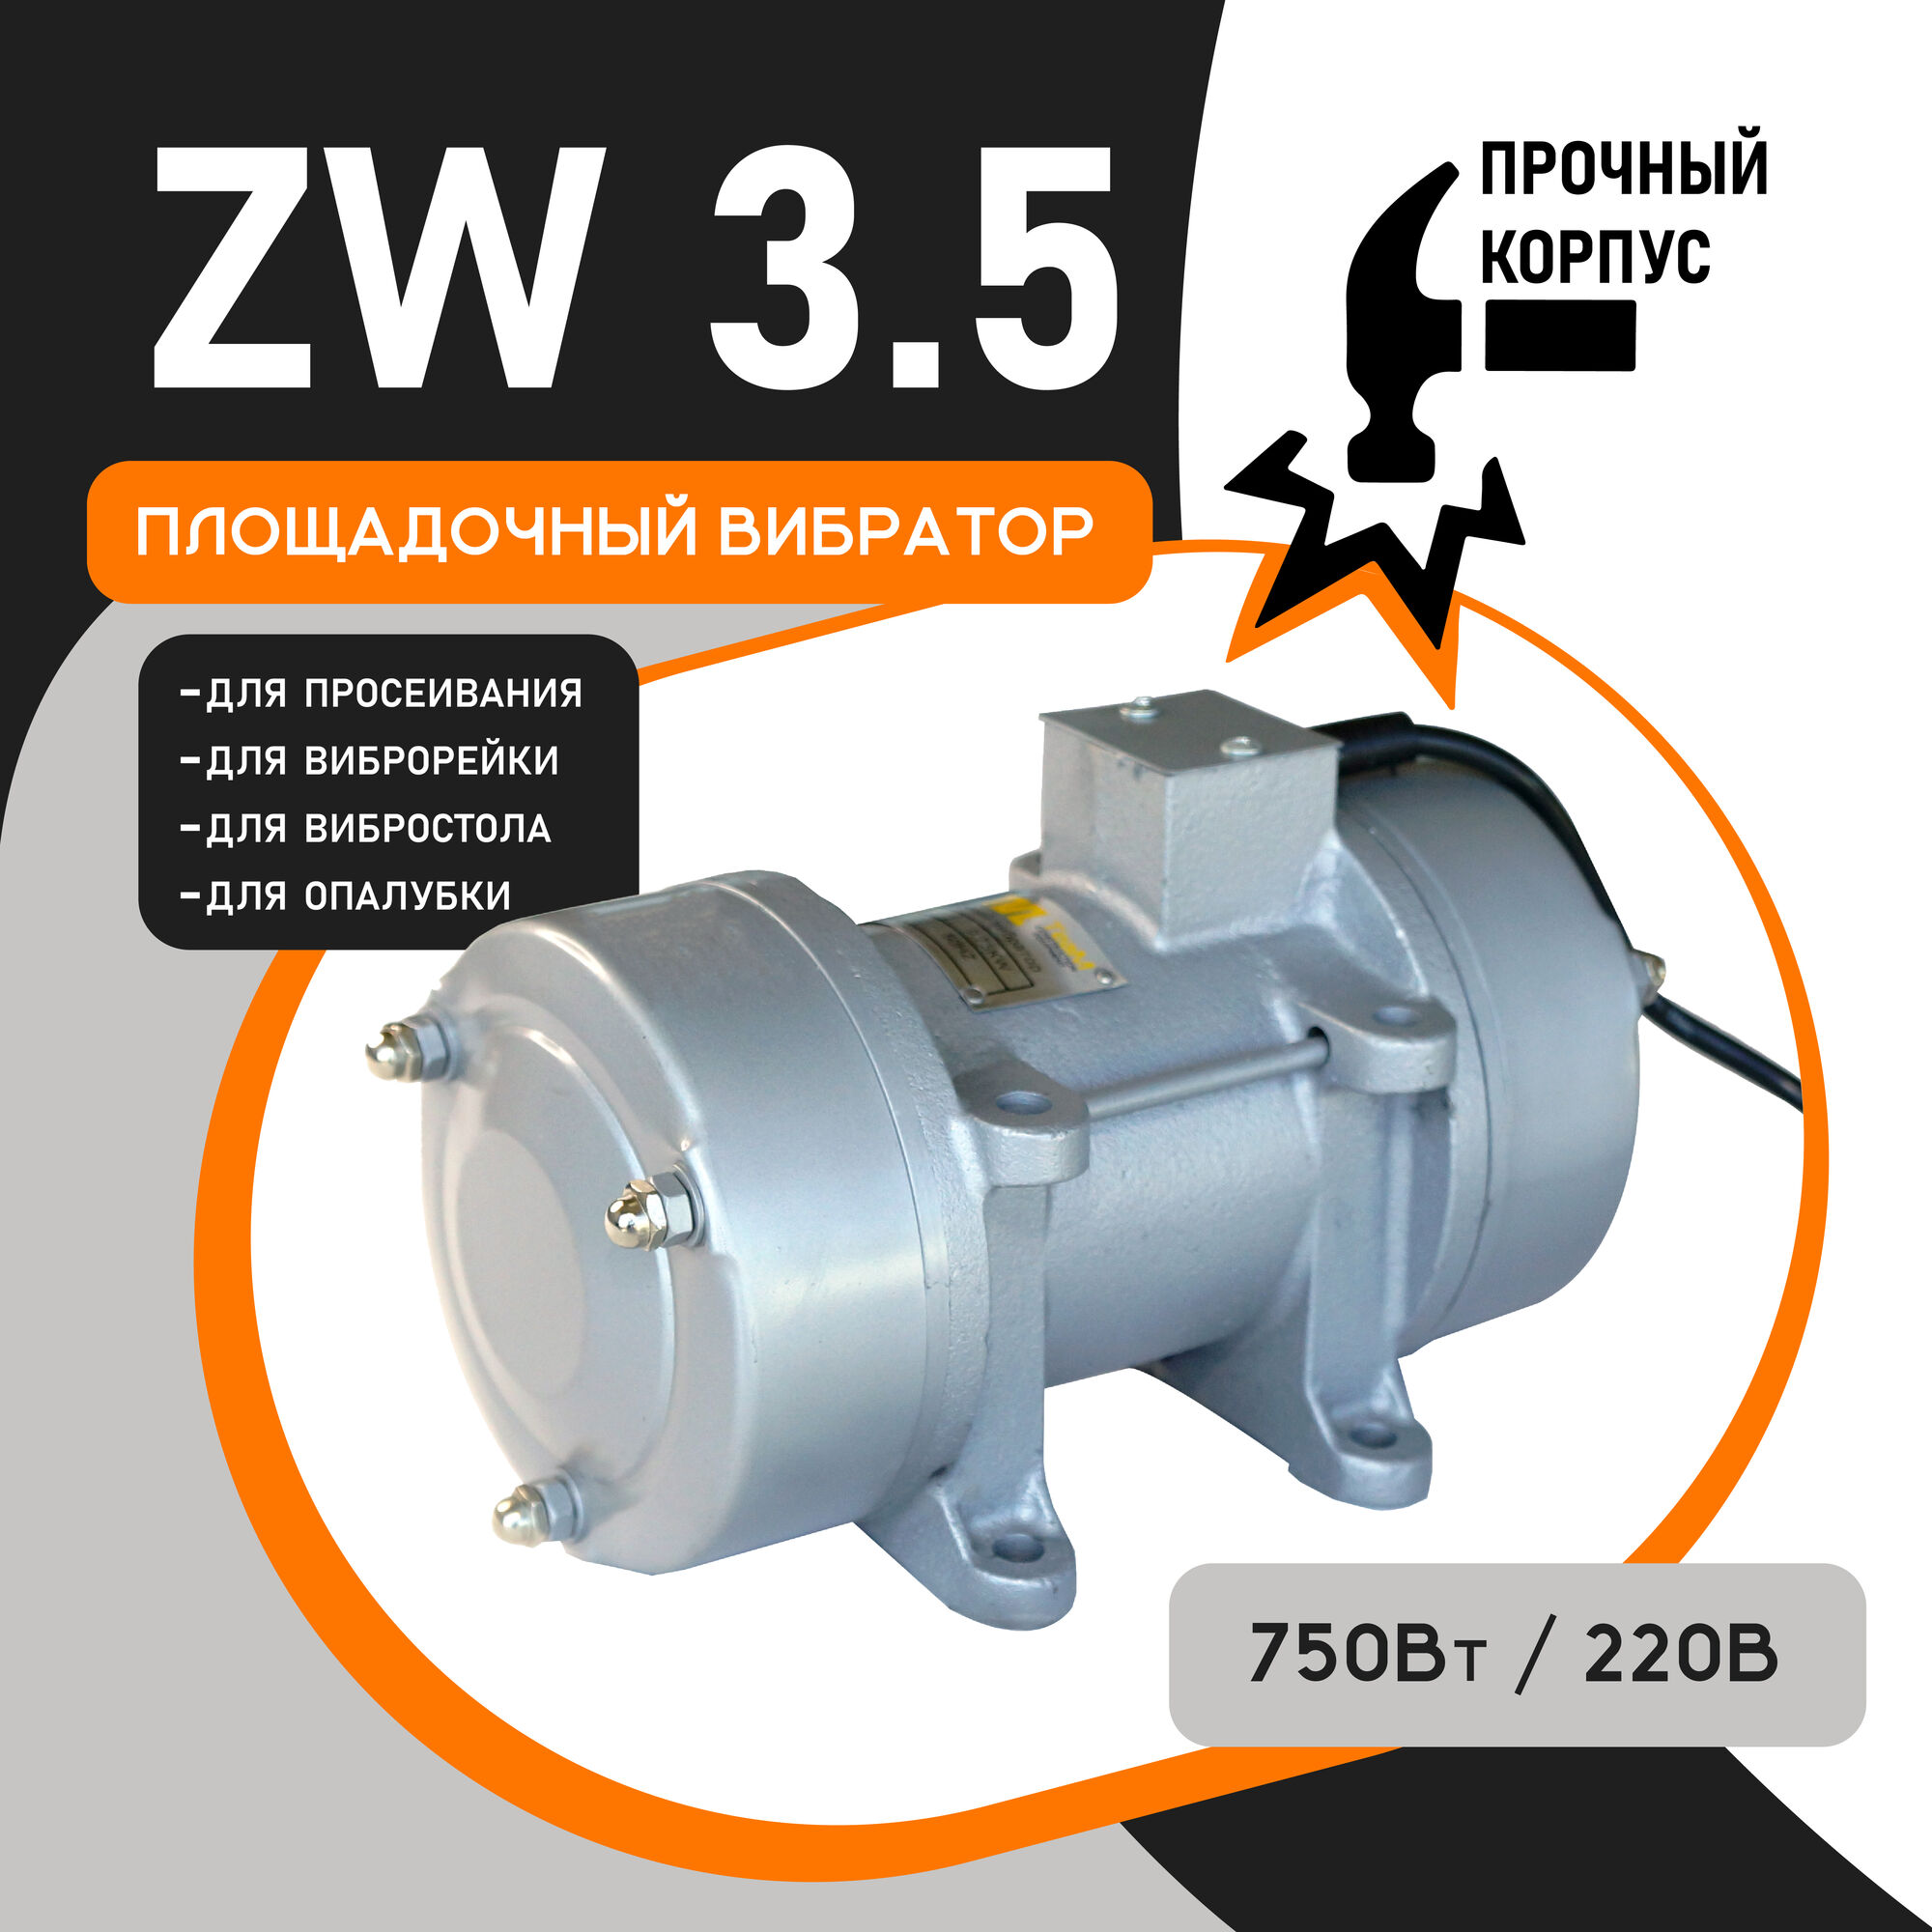 Площадочный вибратор ZW 35 (750 Вт/ 220 В)